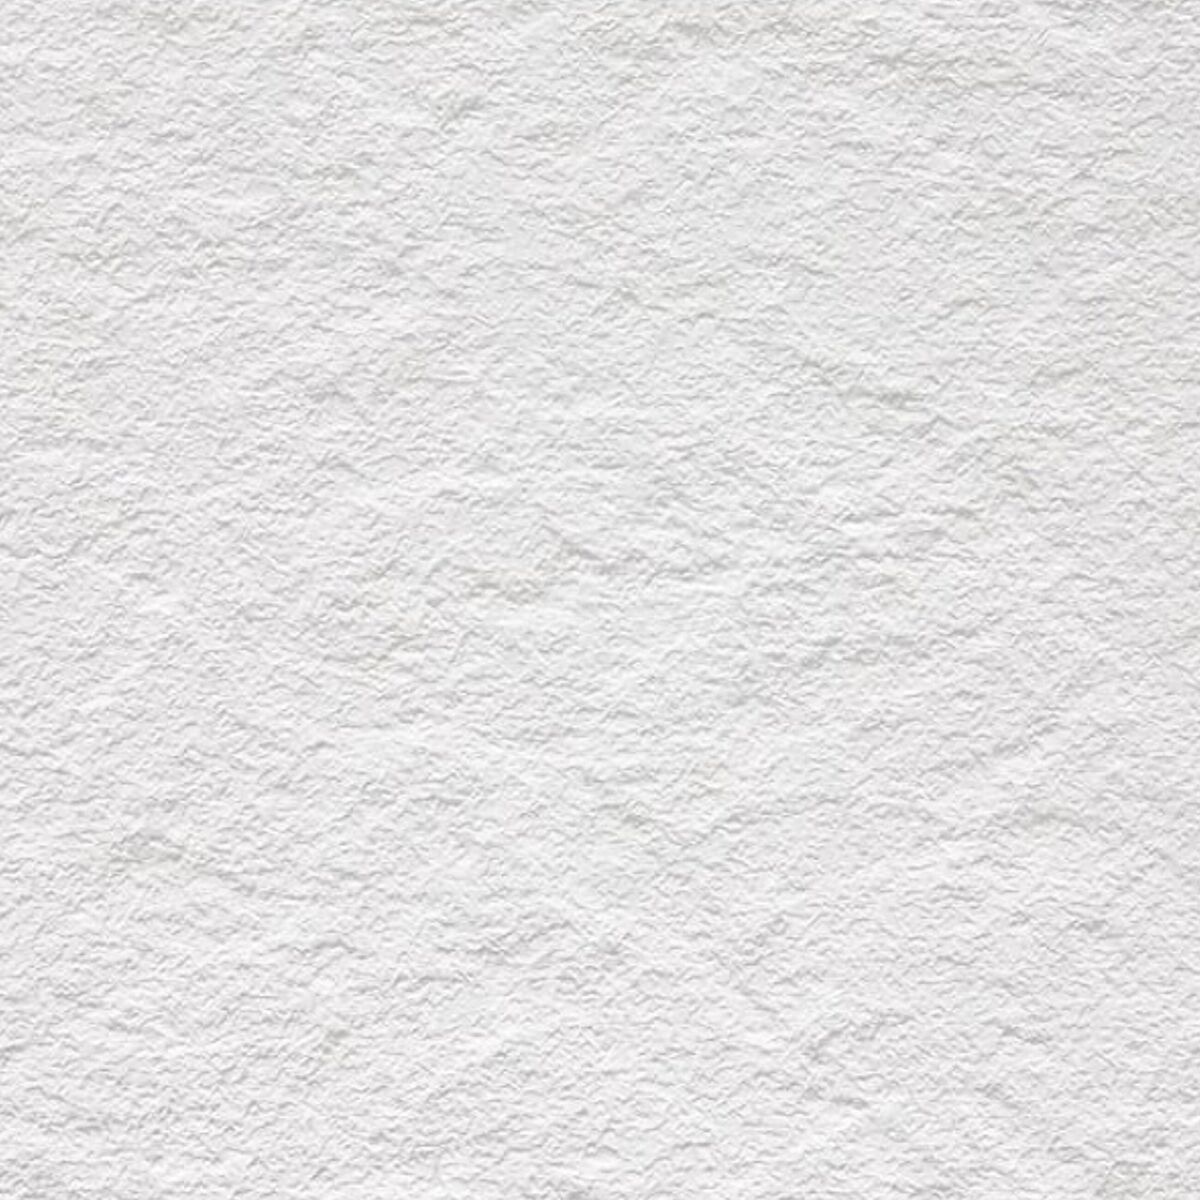 Blat kuchenny kompaktowy white stone 407c Biuro Styl